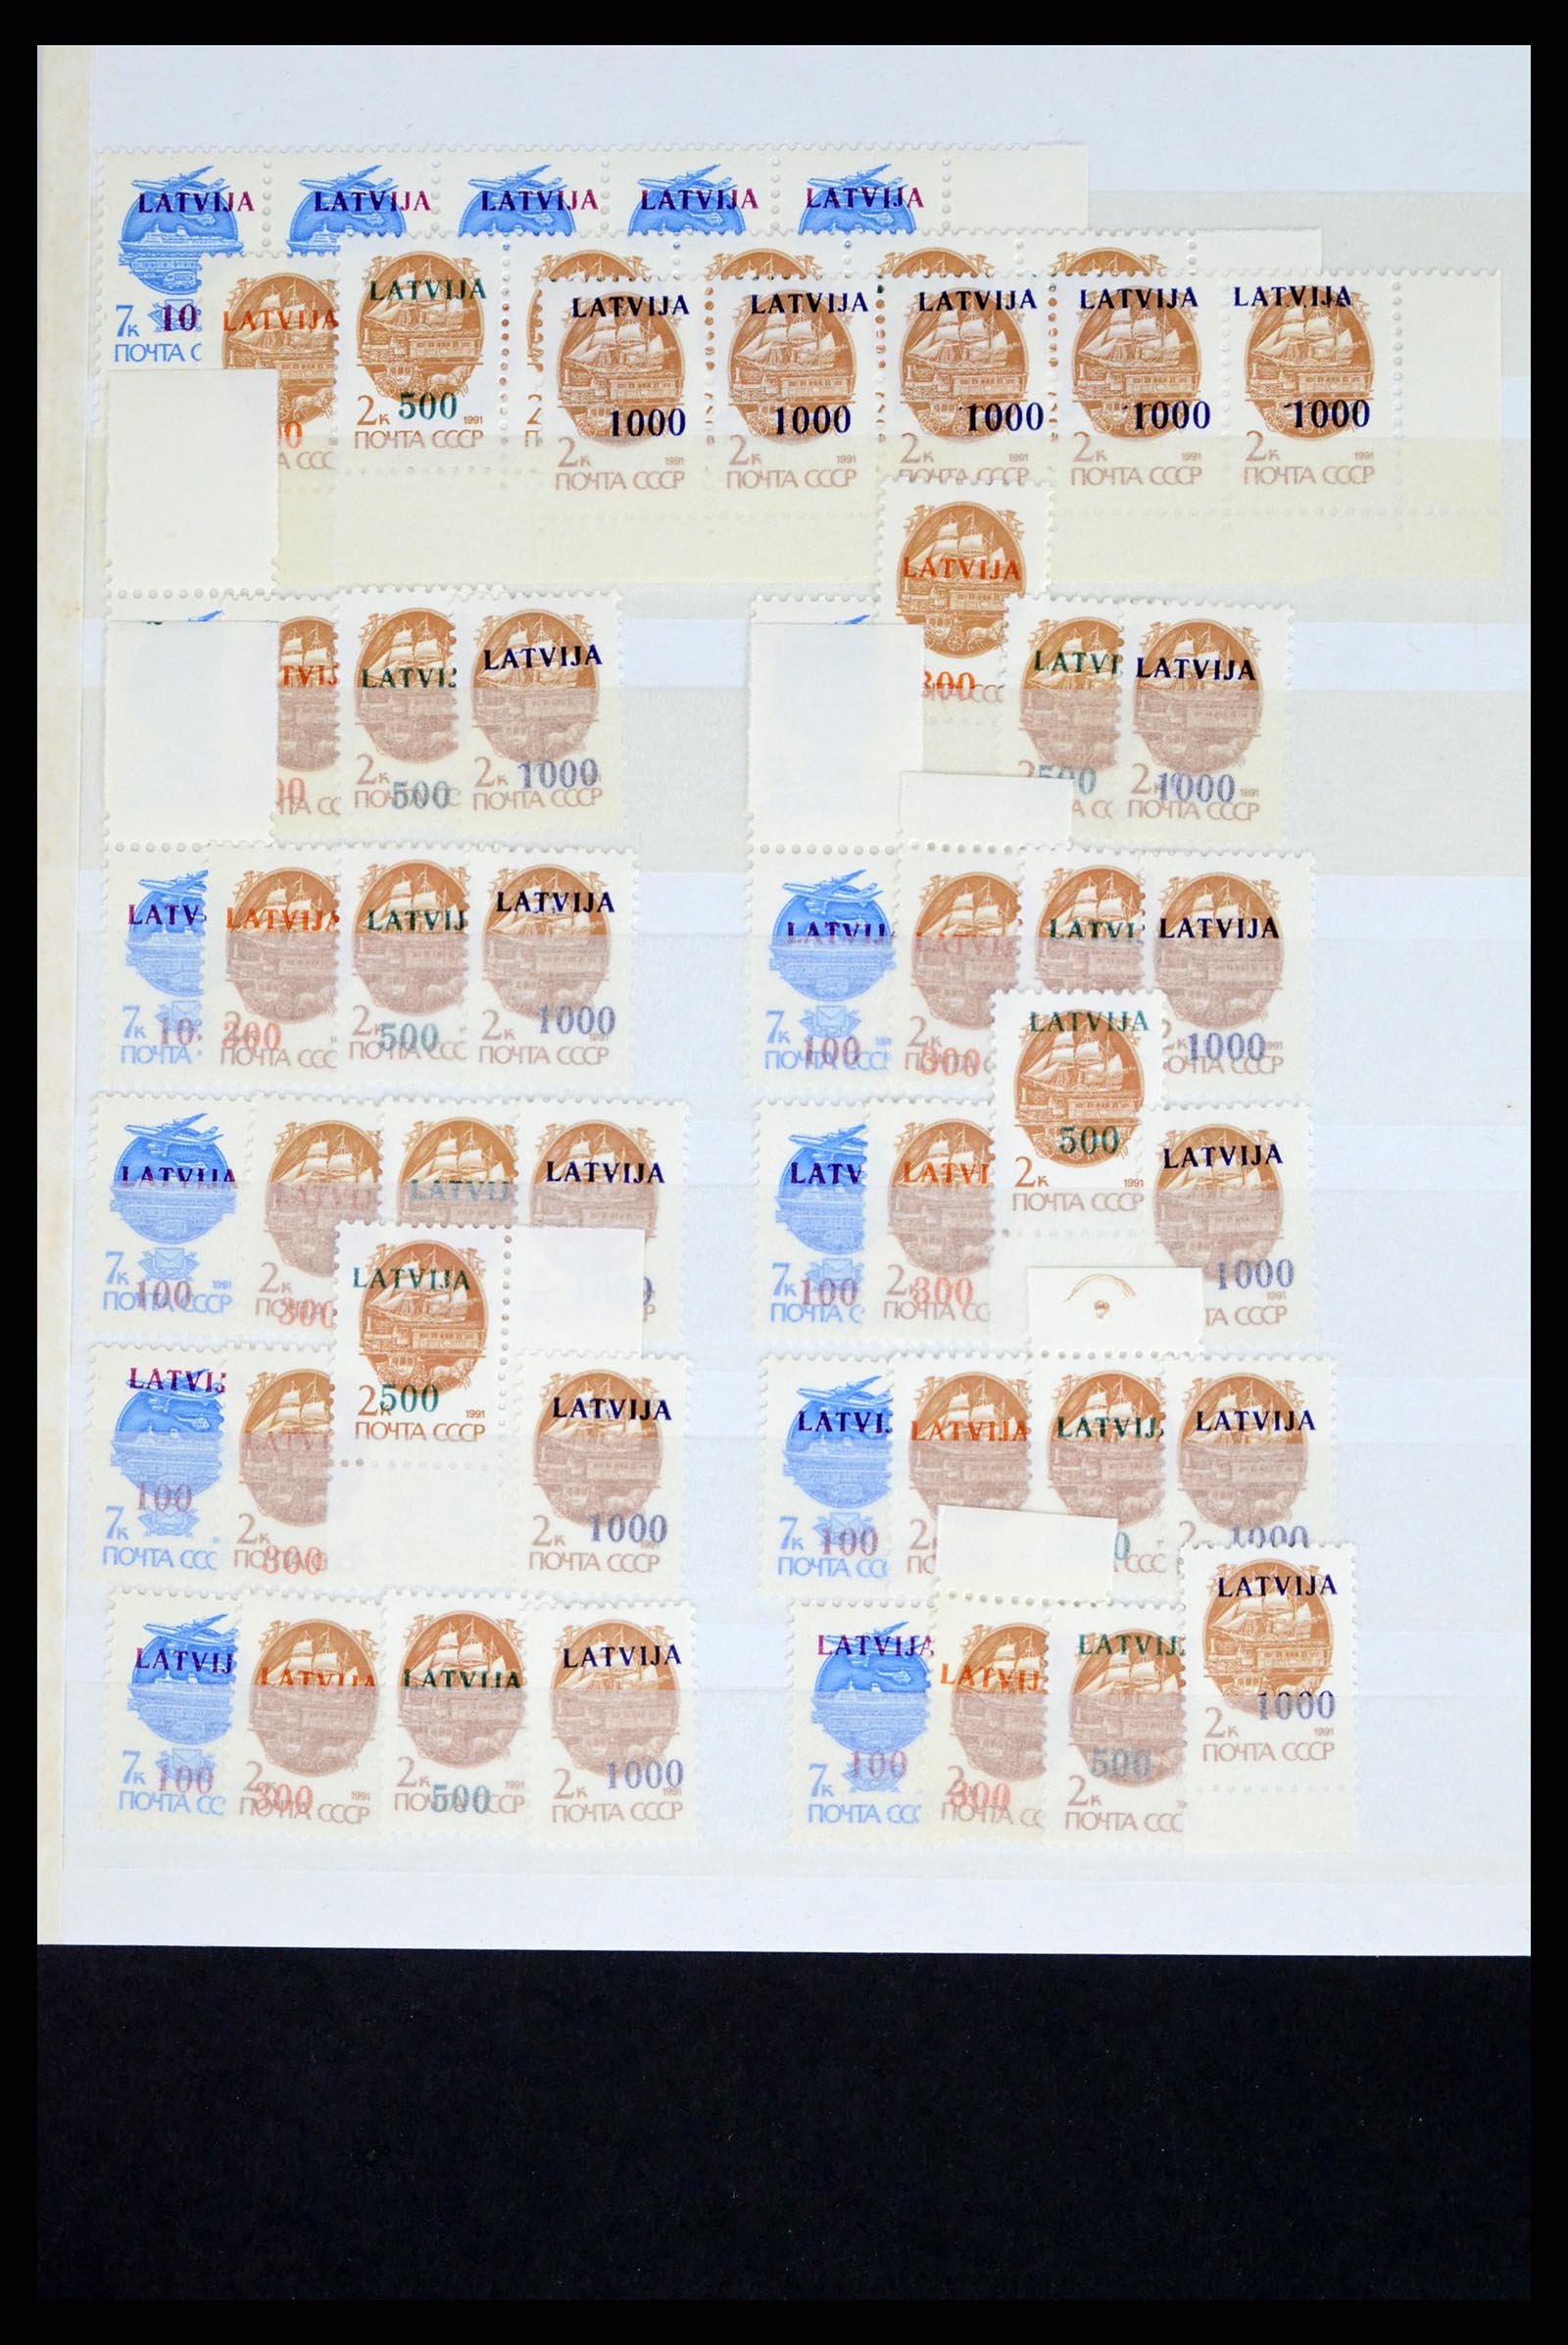 37351 299 - Postzegelverzameling 37351 Europese landen postfris 1990-2000.